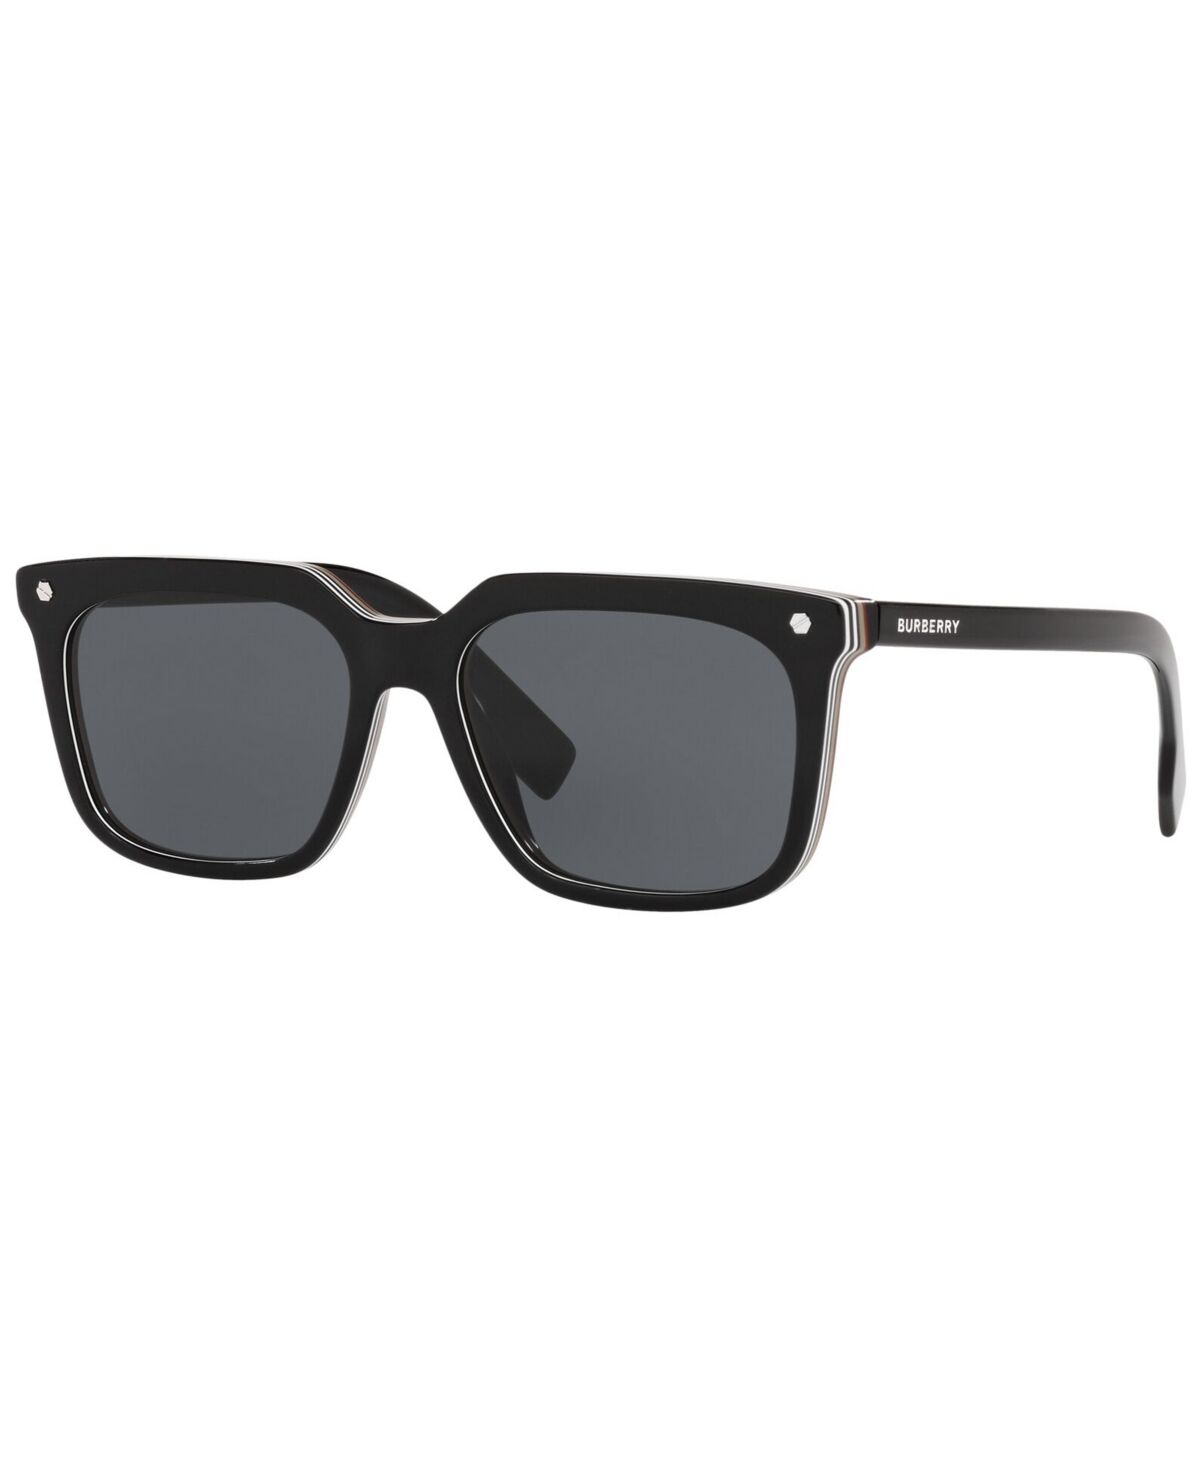 Burberry Men's Carnaby Sunglasses, BE4337 - BLACK/DARK GREY